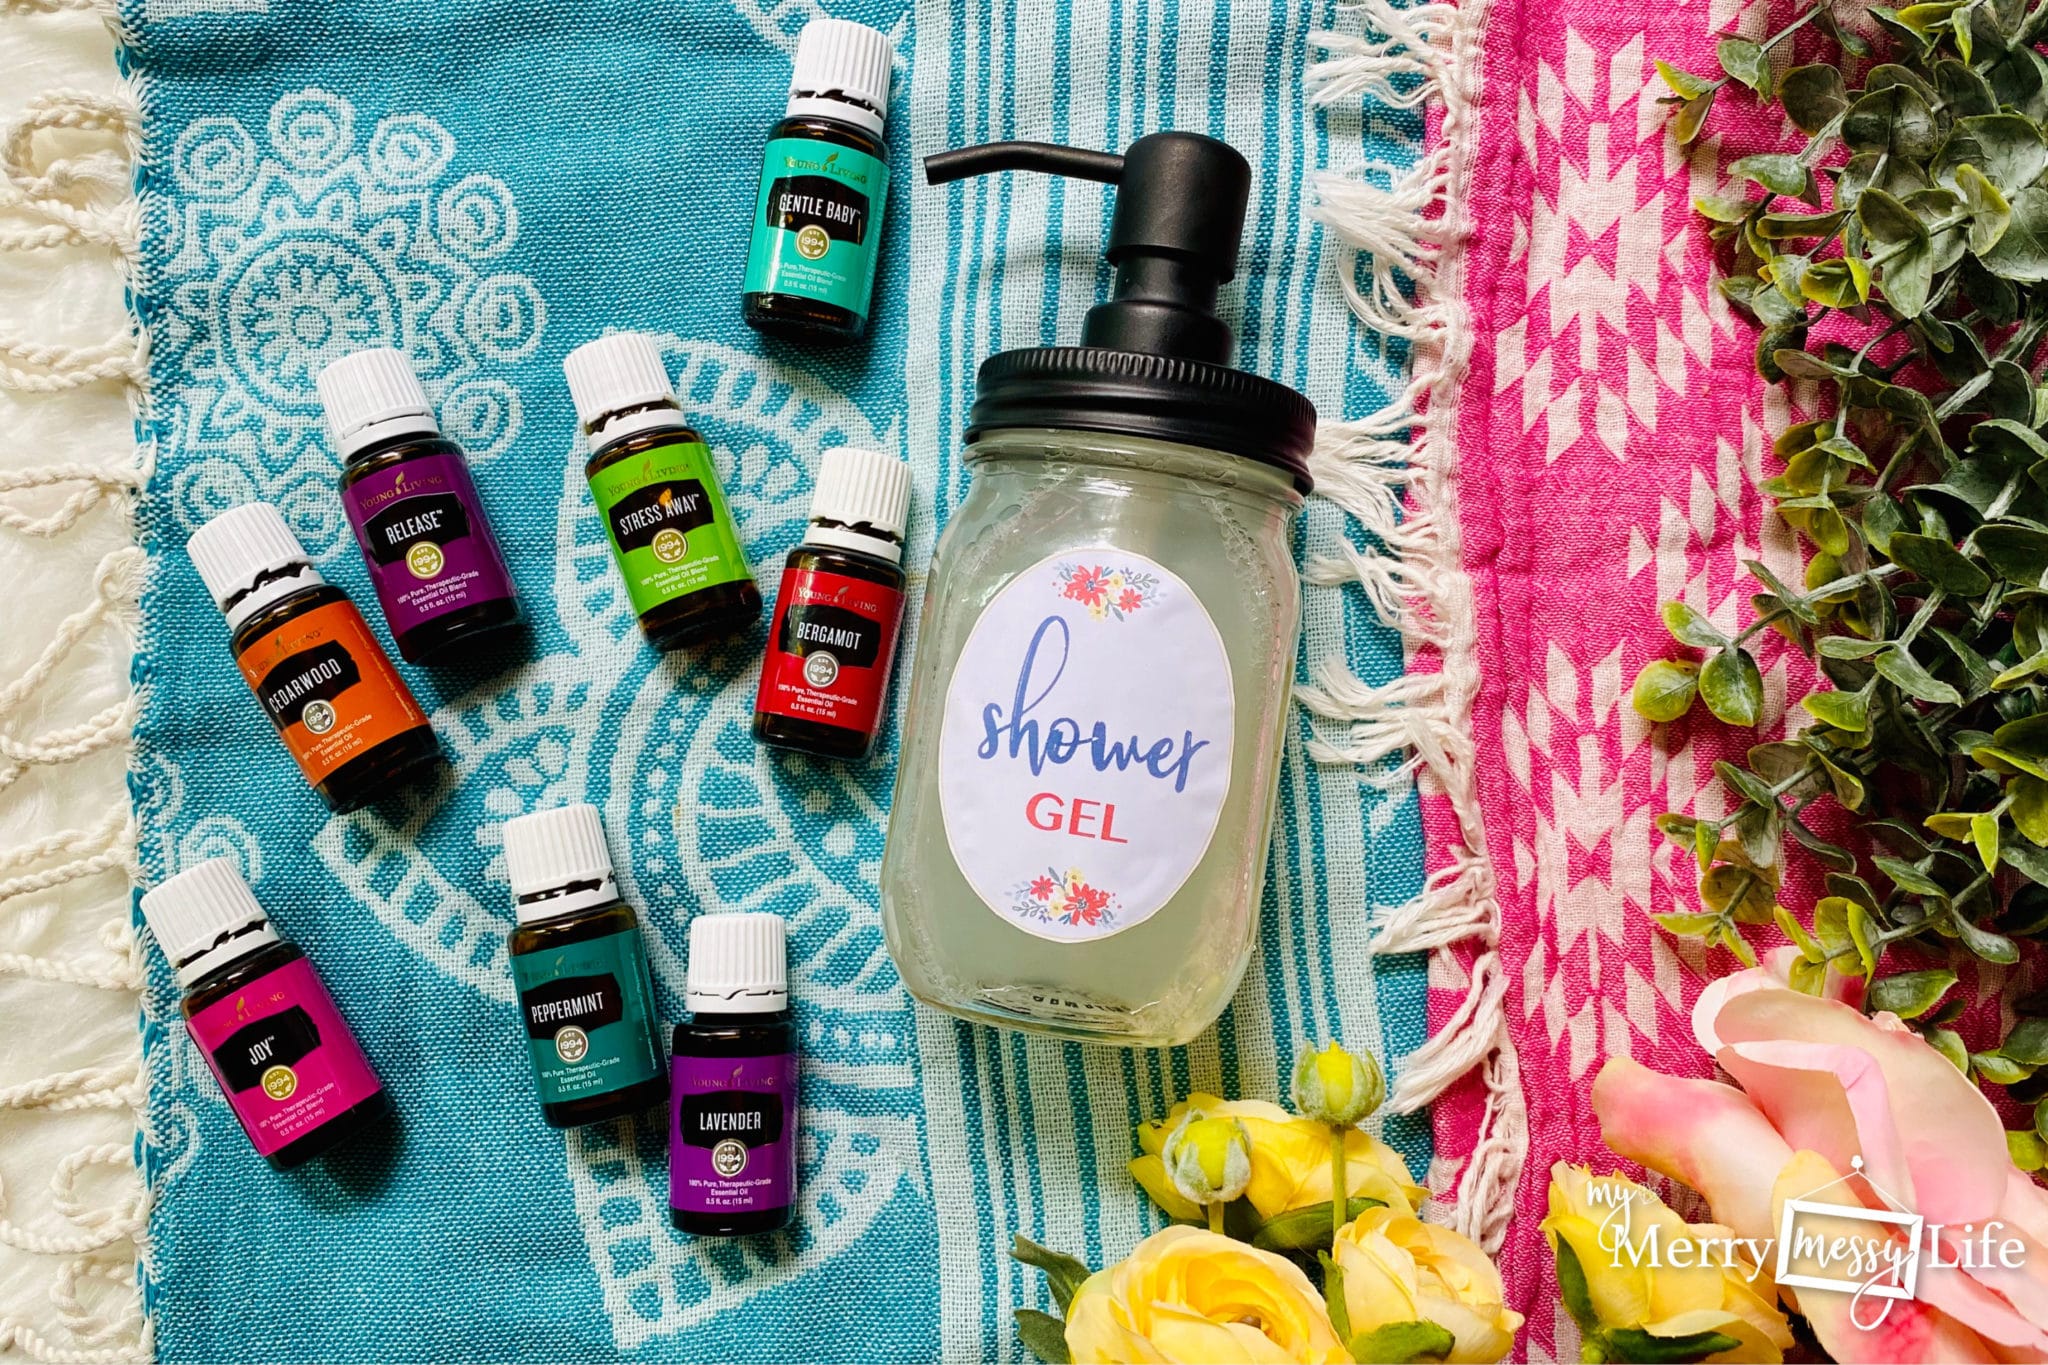 DIY Natural Shower Gel Recipe - essential oil options like Gentle Baby, Cedarwood, Release, Joy, Bergamot, Lavender, Peppermint, and Stress Away